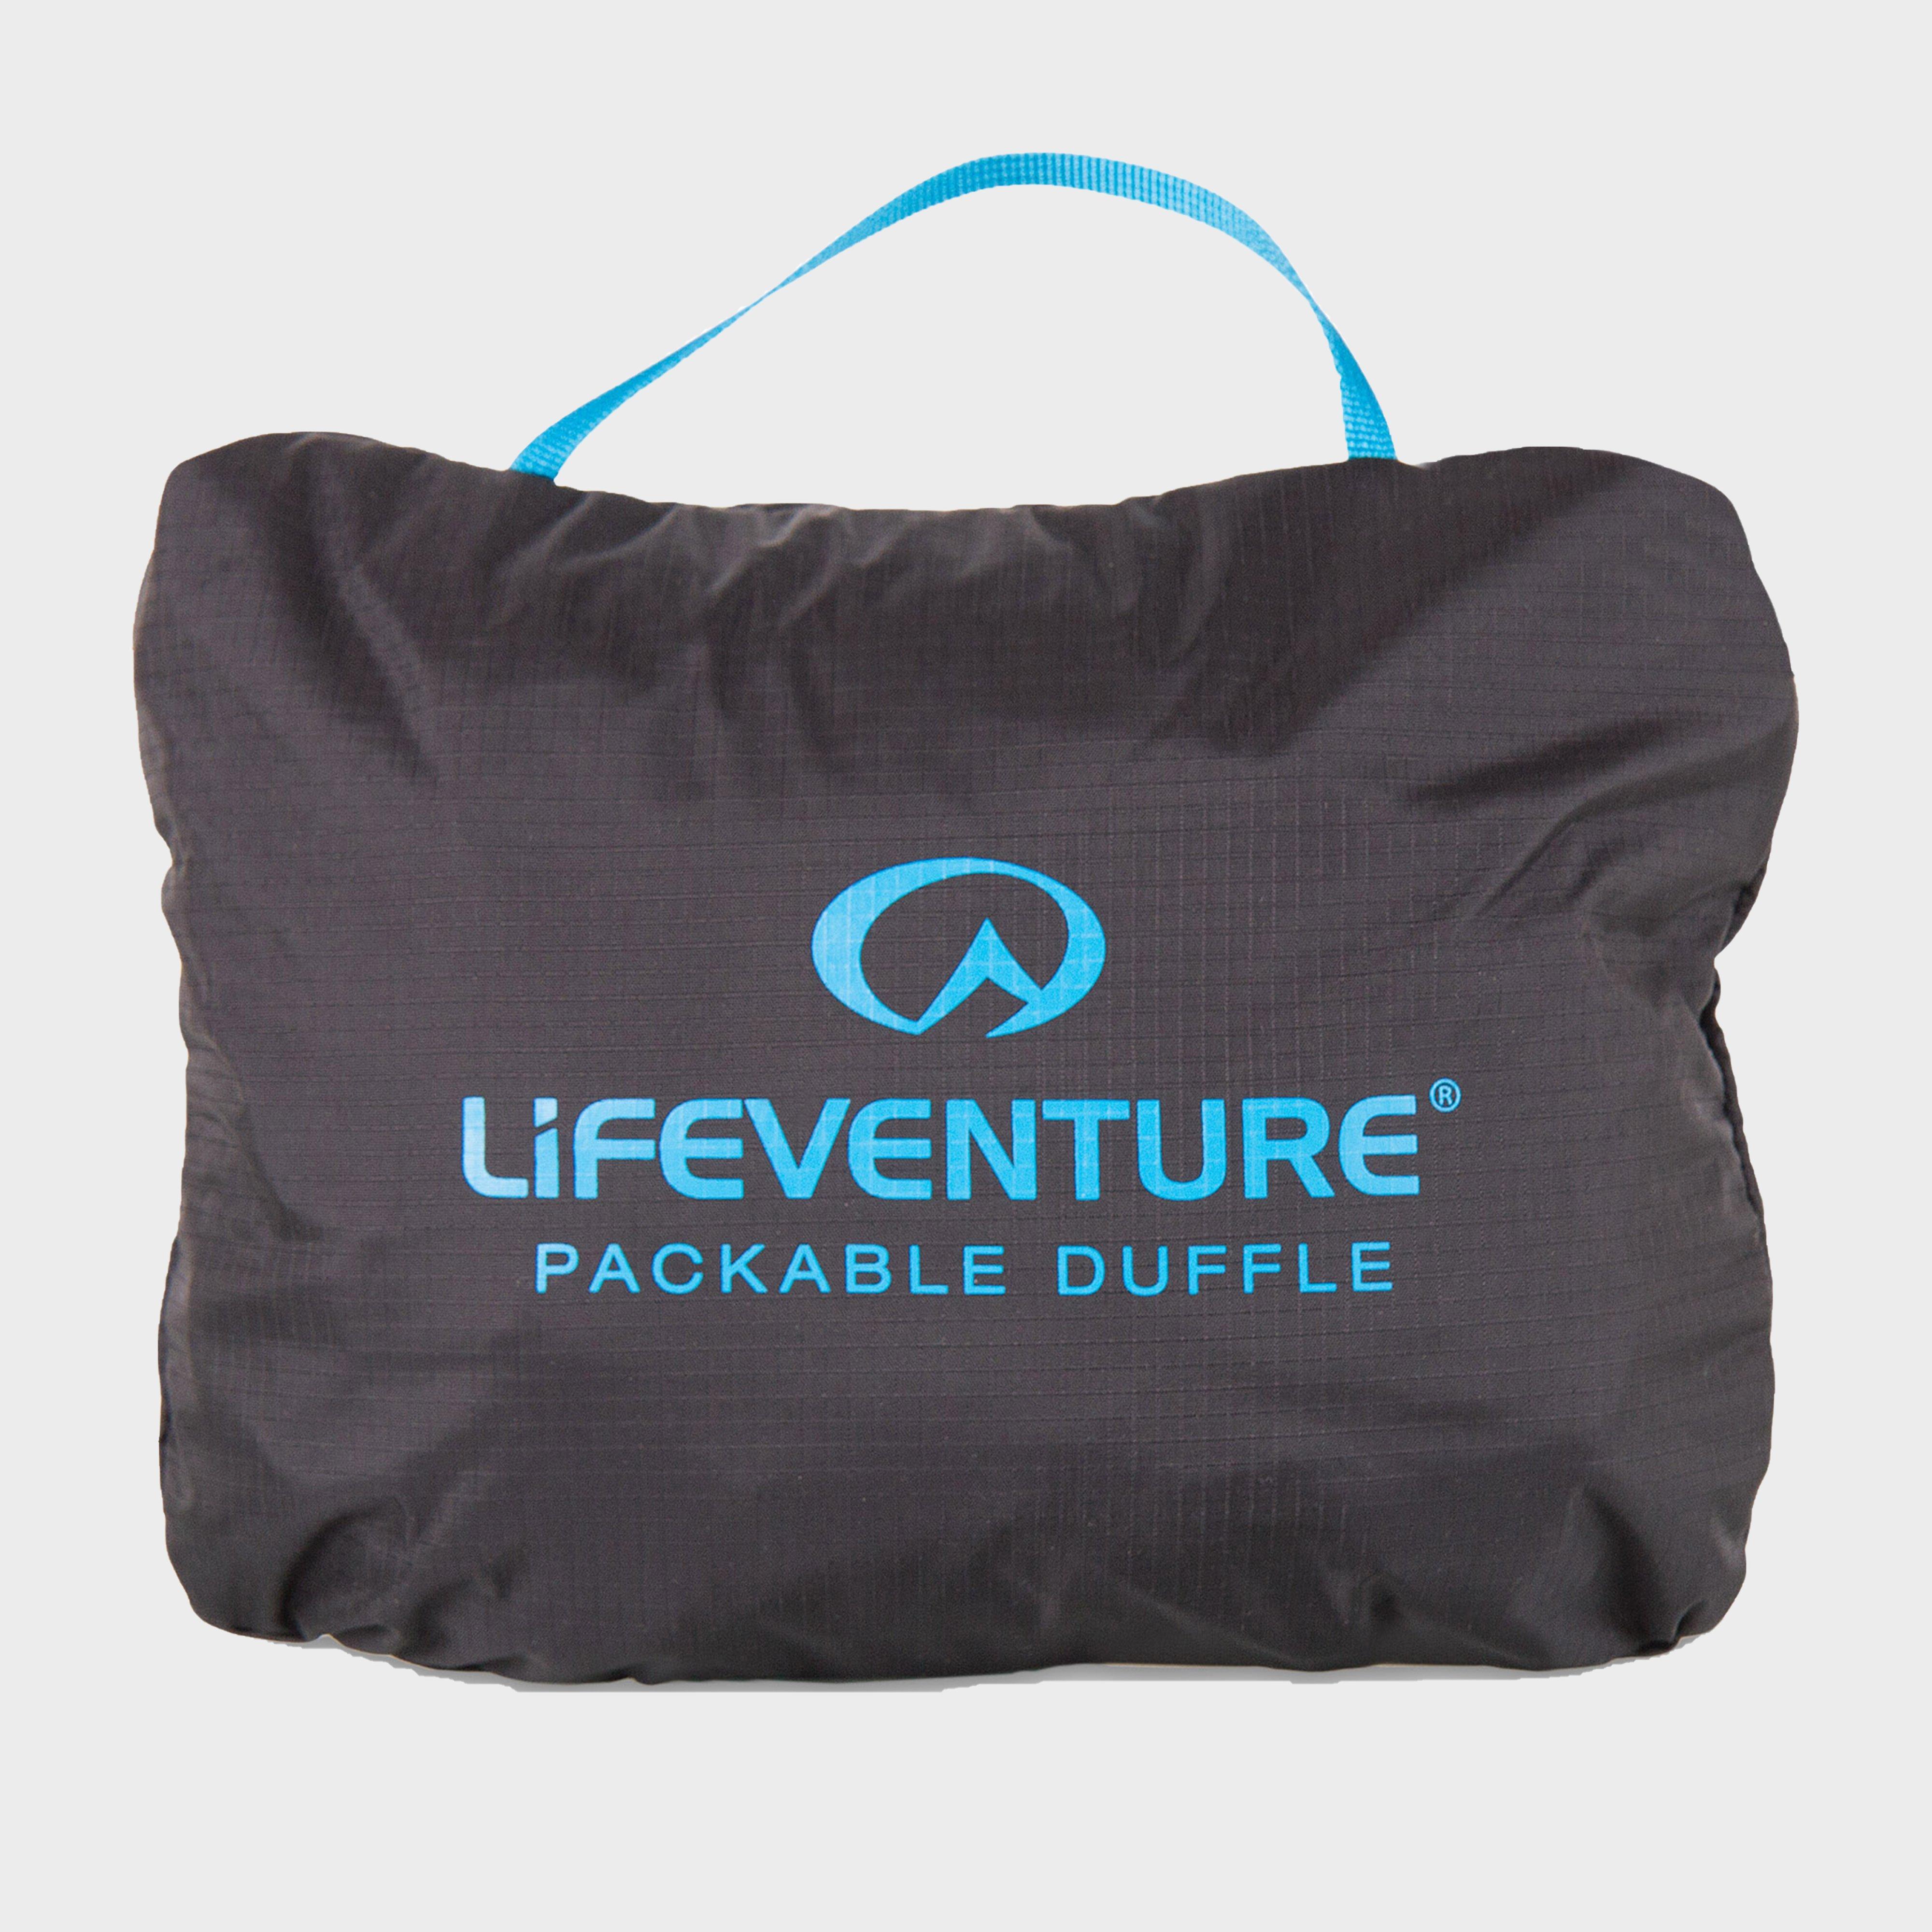 Lifeventure Packable Duffle Bag Review